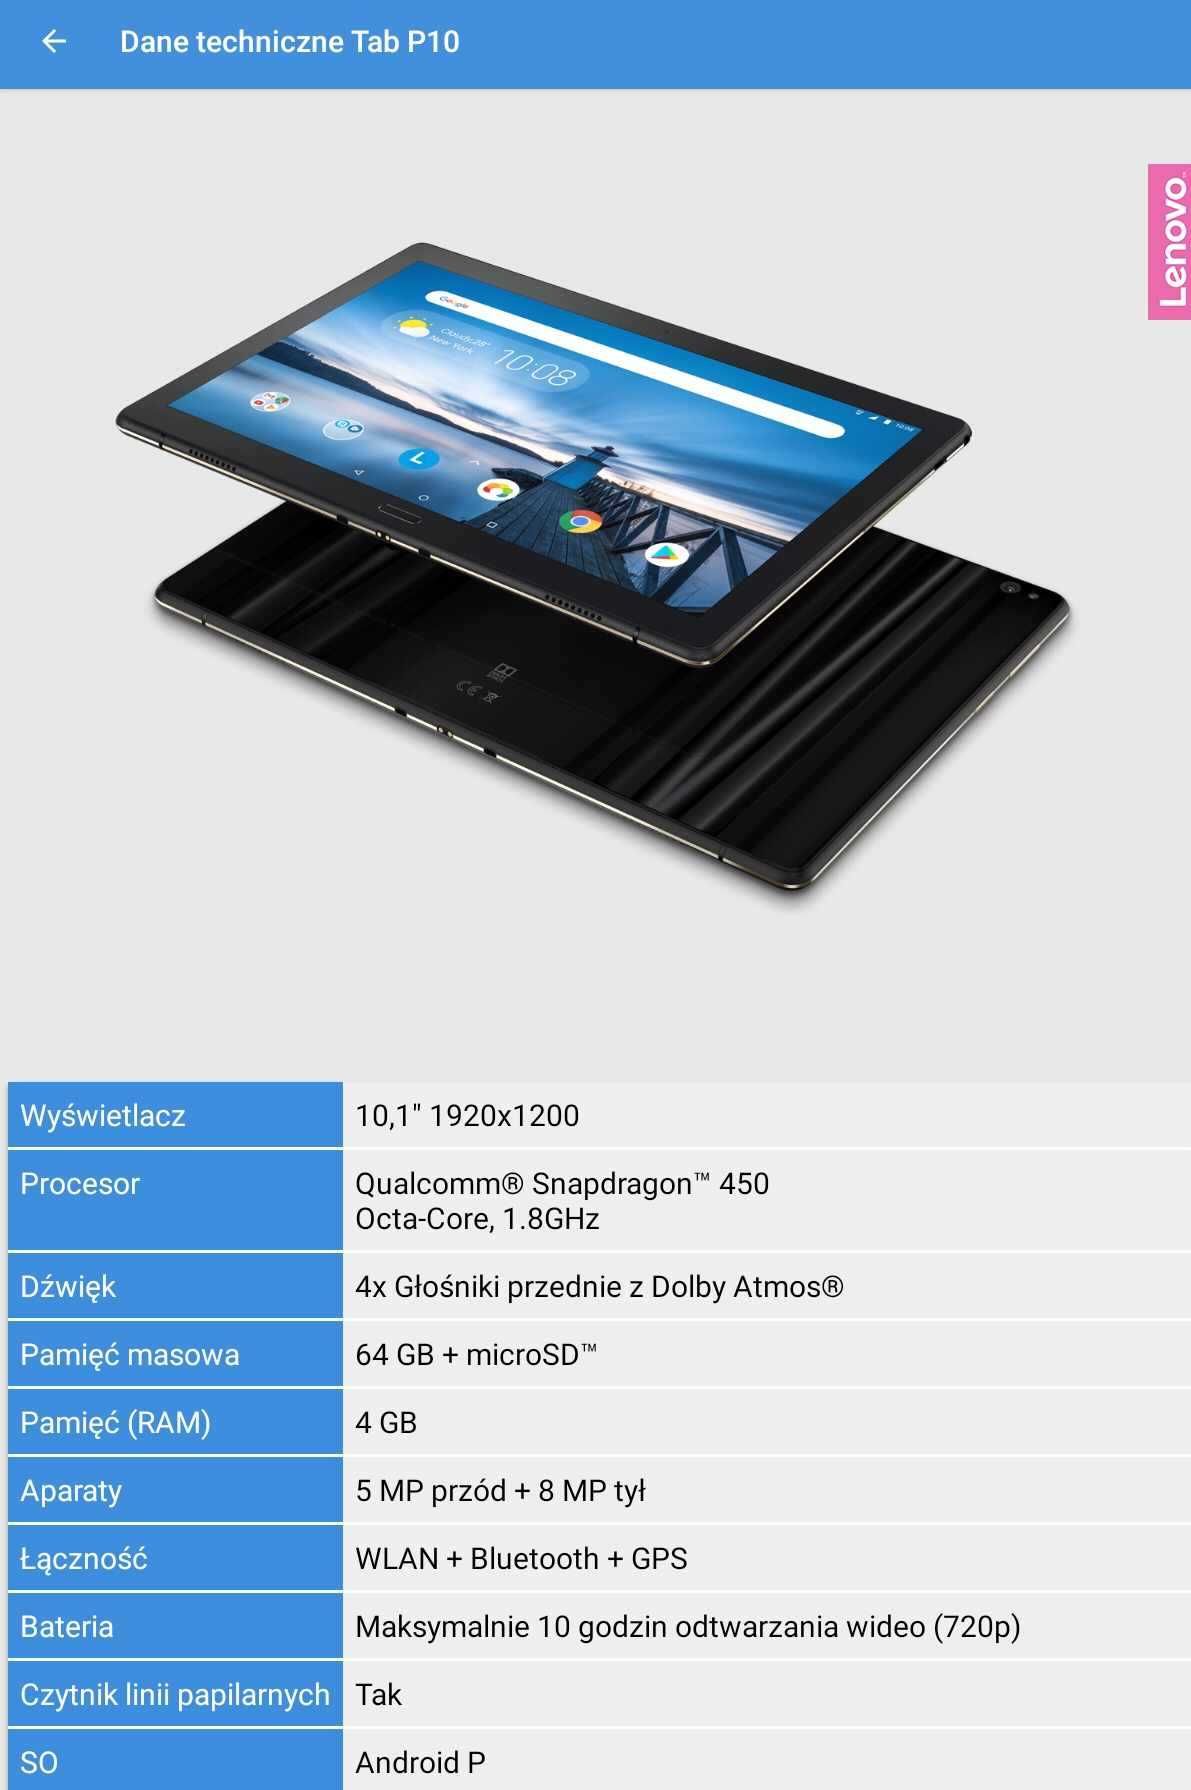 lenovo Tablet TAB P10 450/4GB/64GB/10.1/+ ETUI